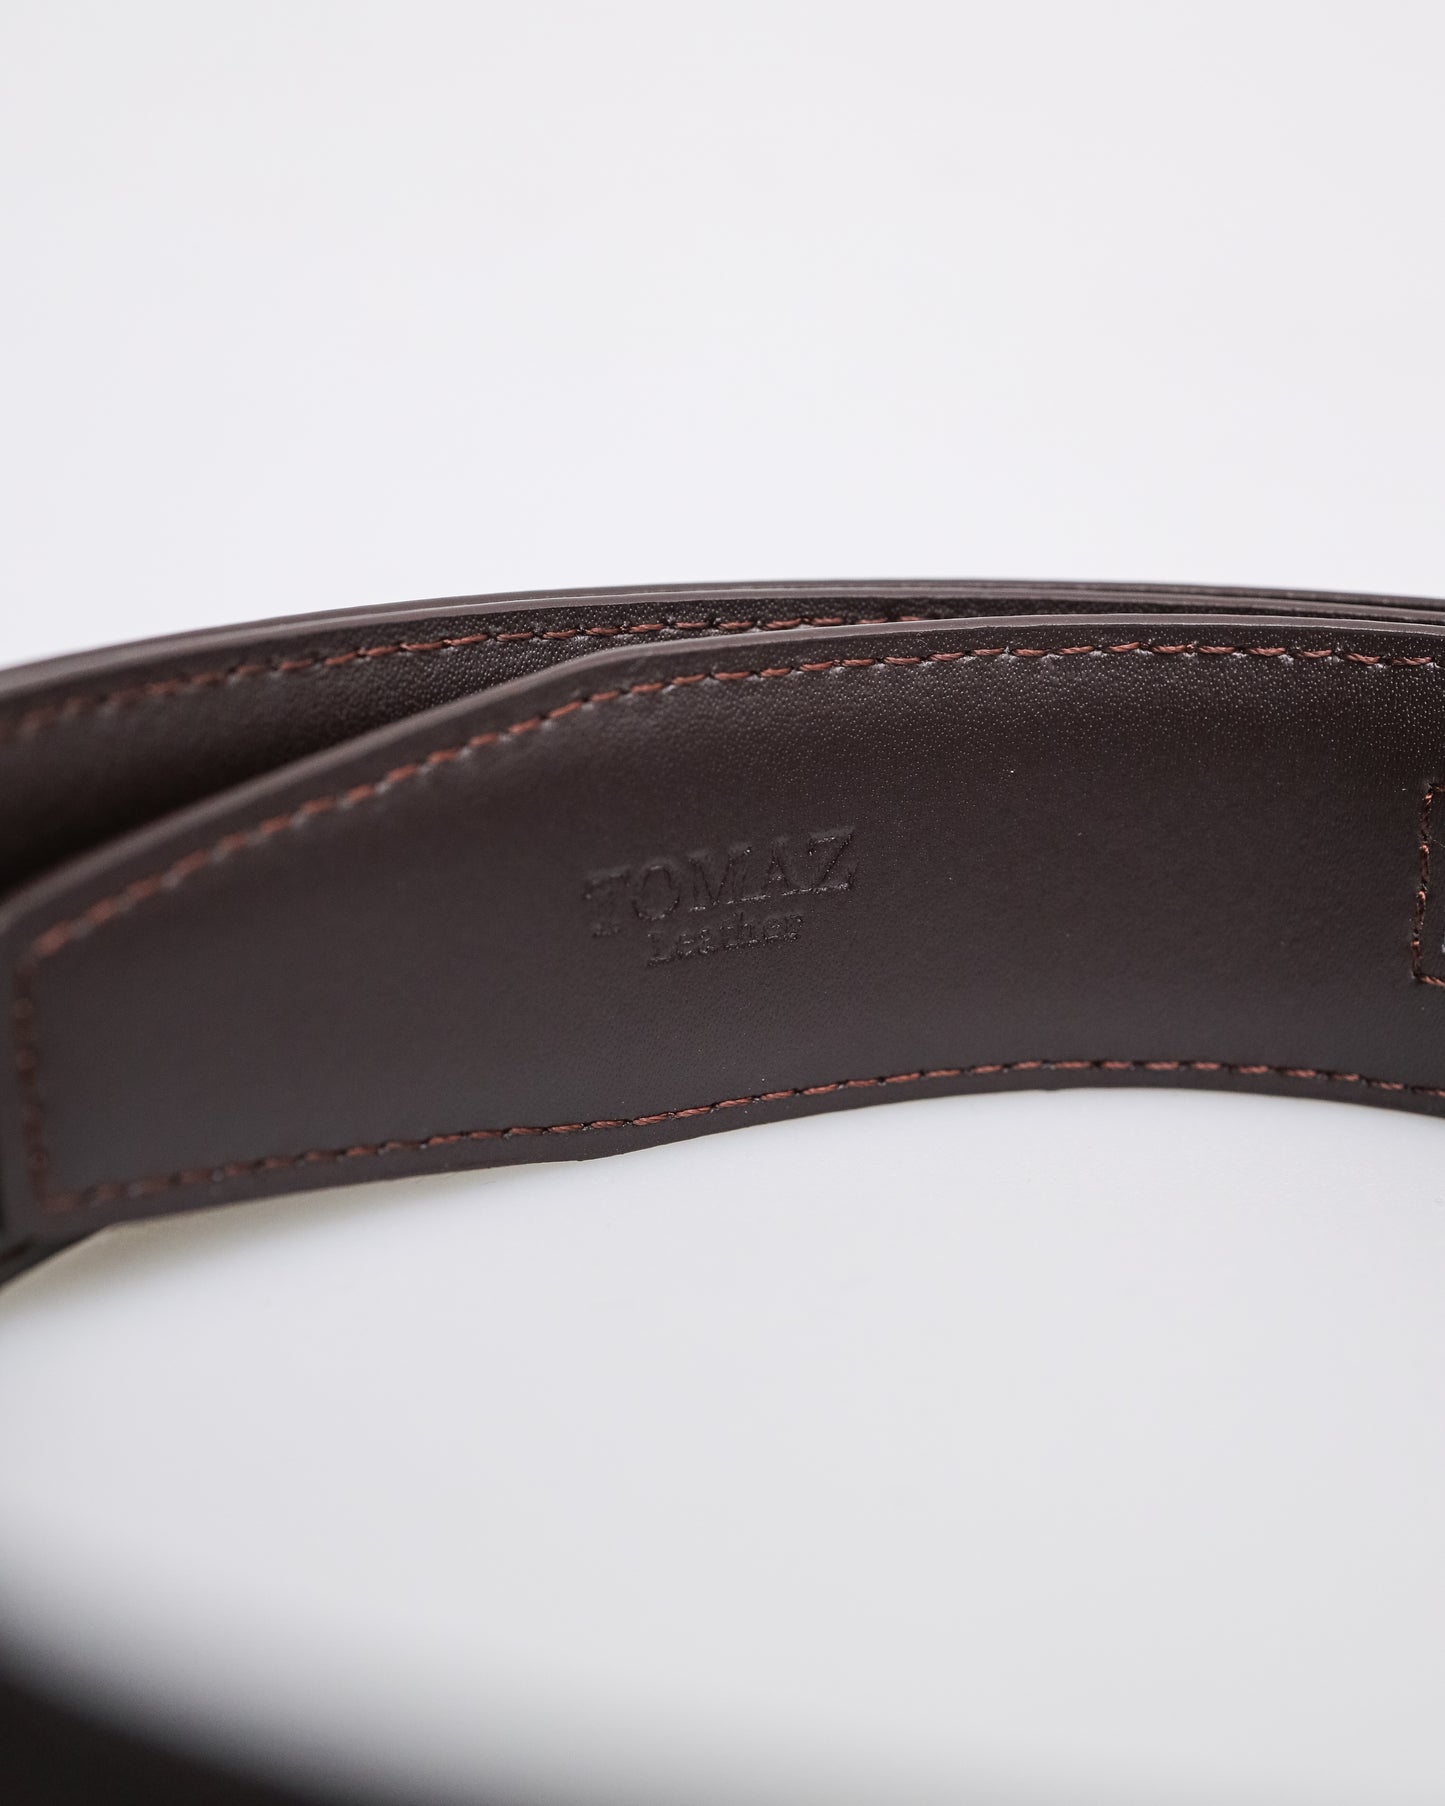 Tomaz AB122 Men's Automatic Split Leather Belt (Coffee)